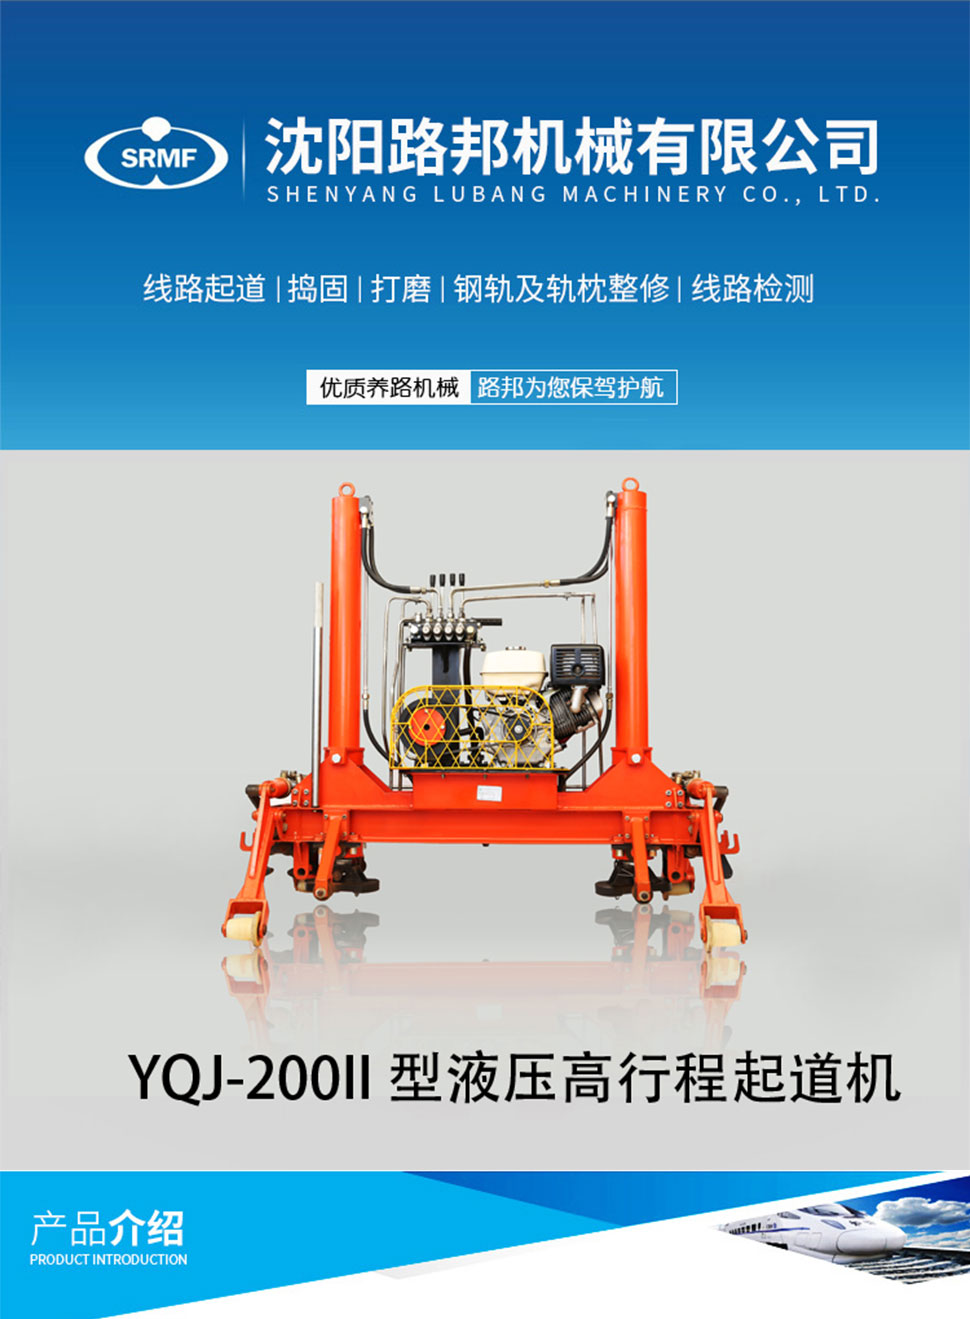 YQJ-200II型液压高行程起道机